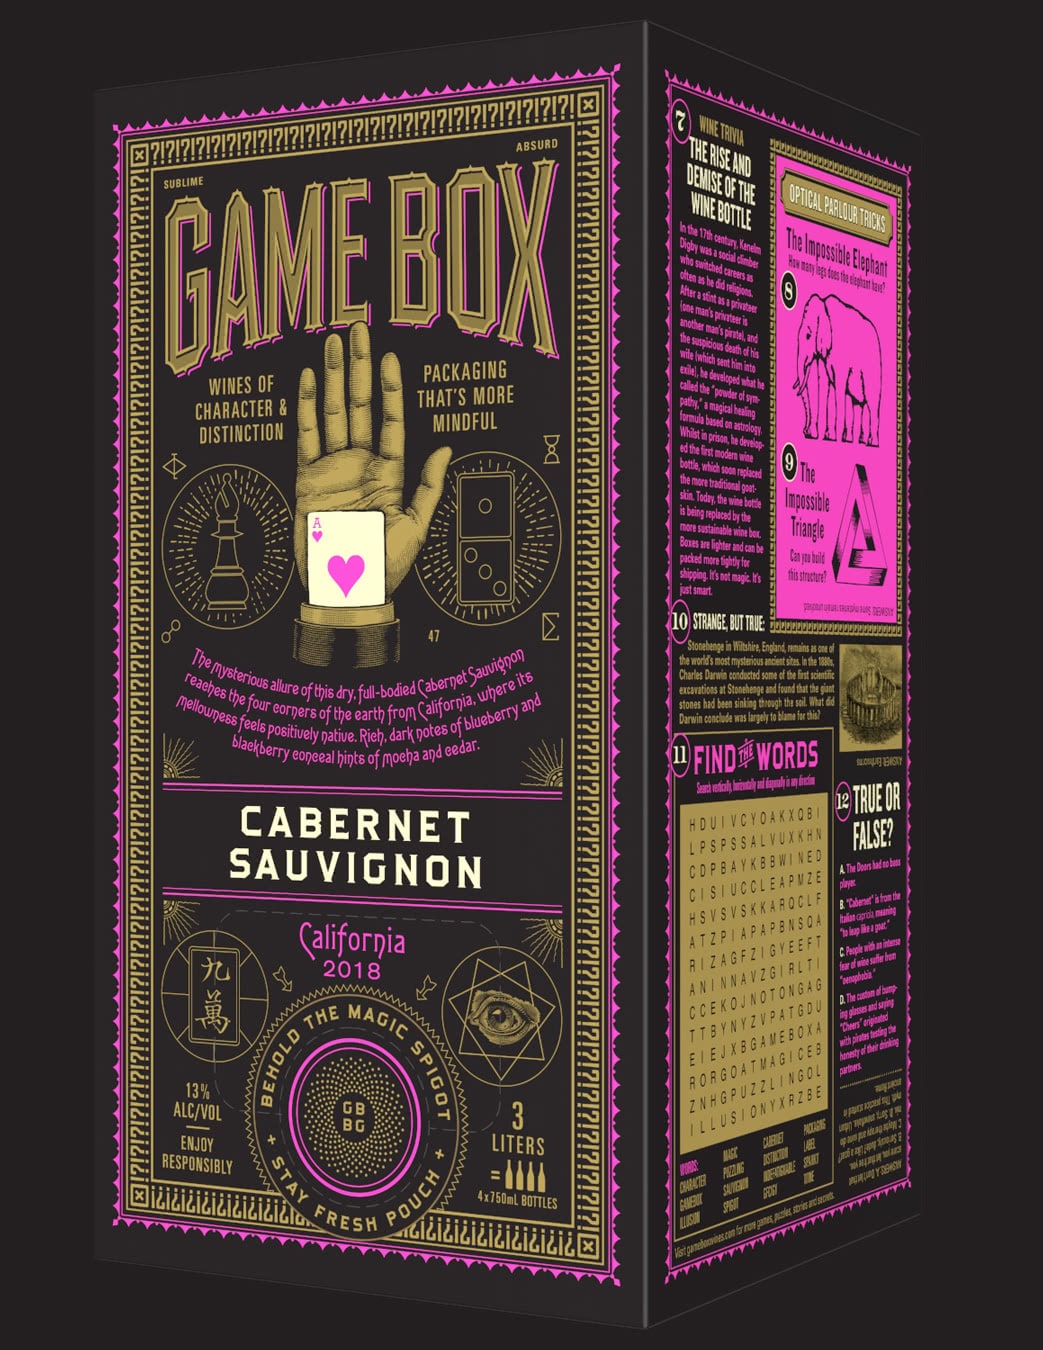 Game Box Wines Cabernet side panel design detail